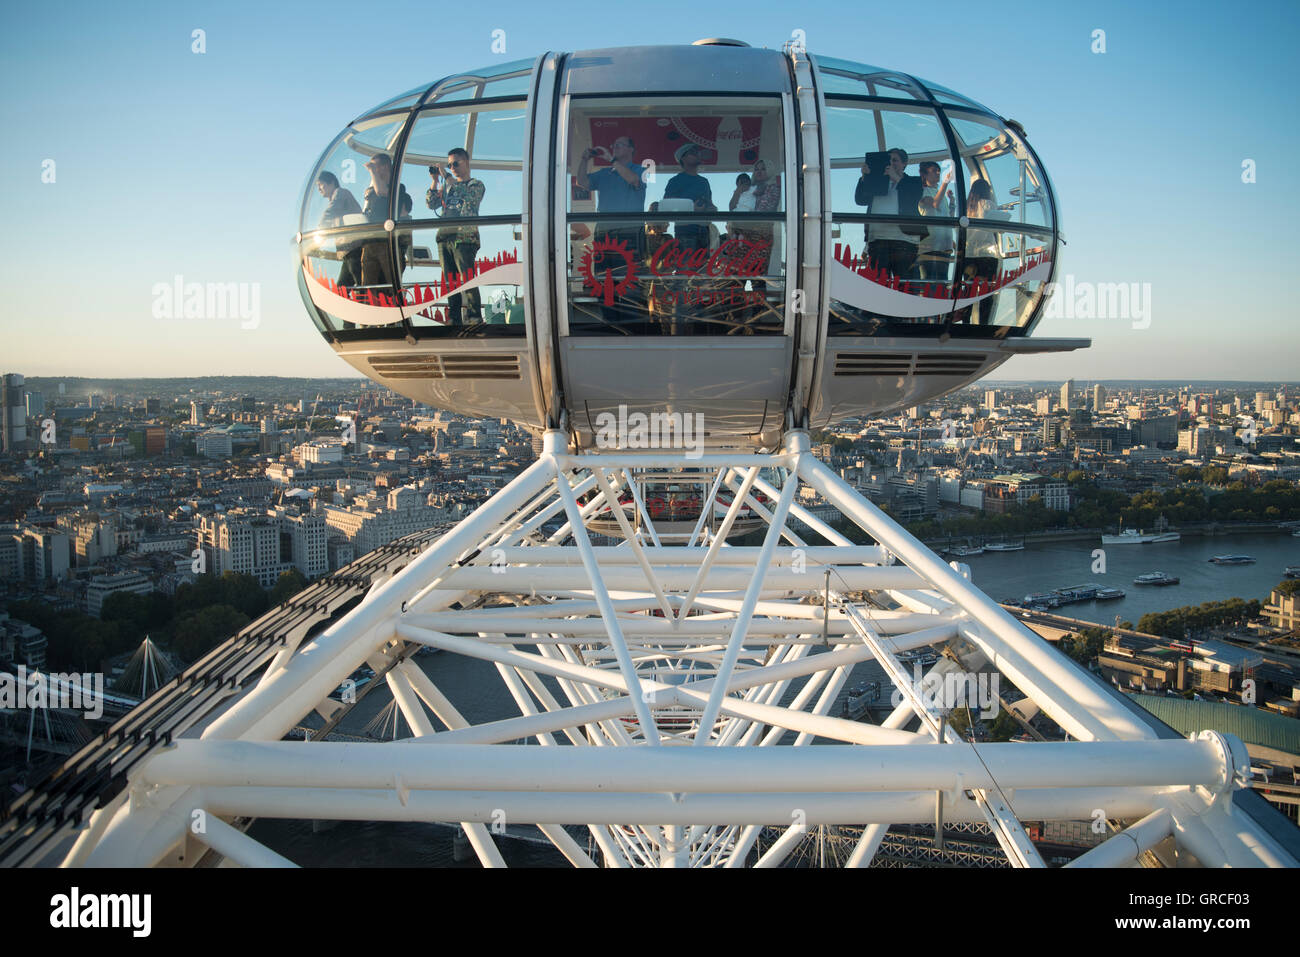 London Eye ferris wheel overlooking the Thames River, London, England. Stock Photo